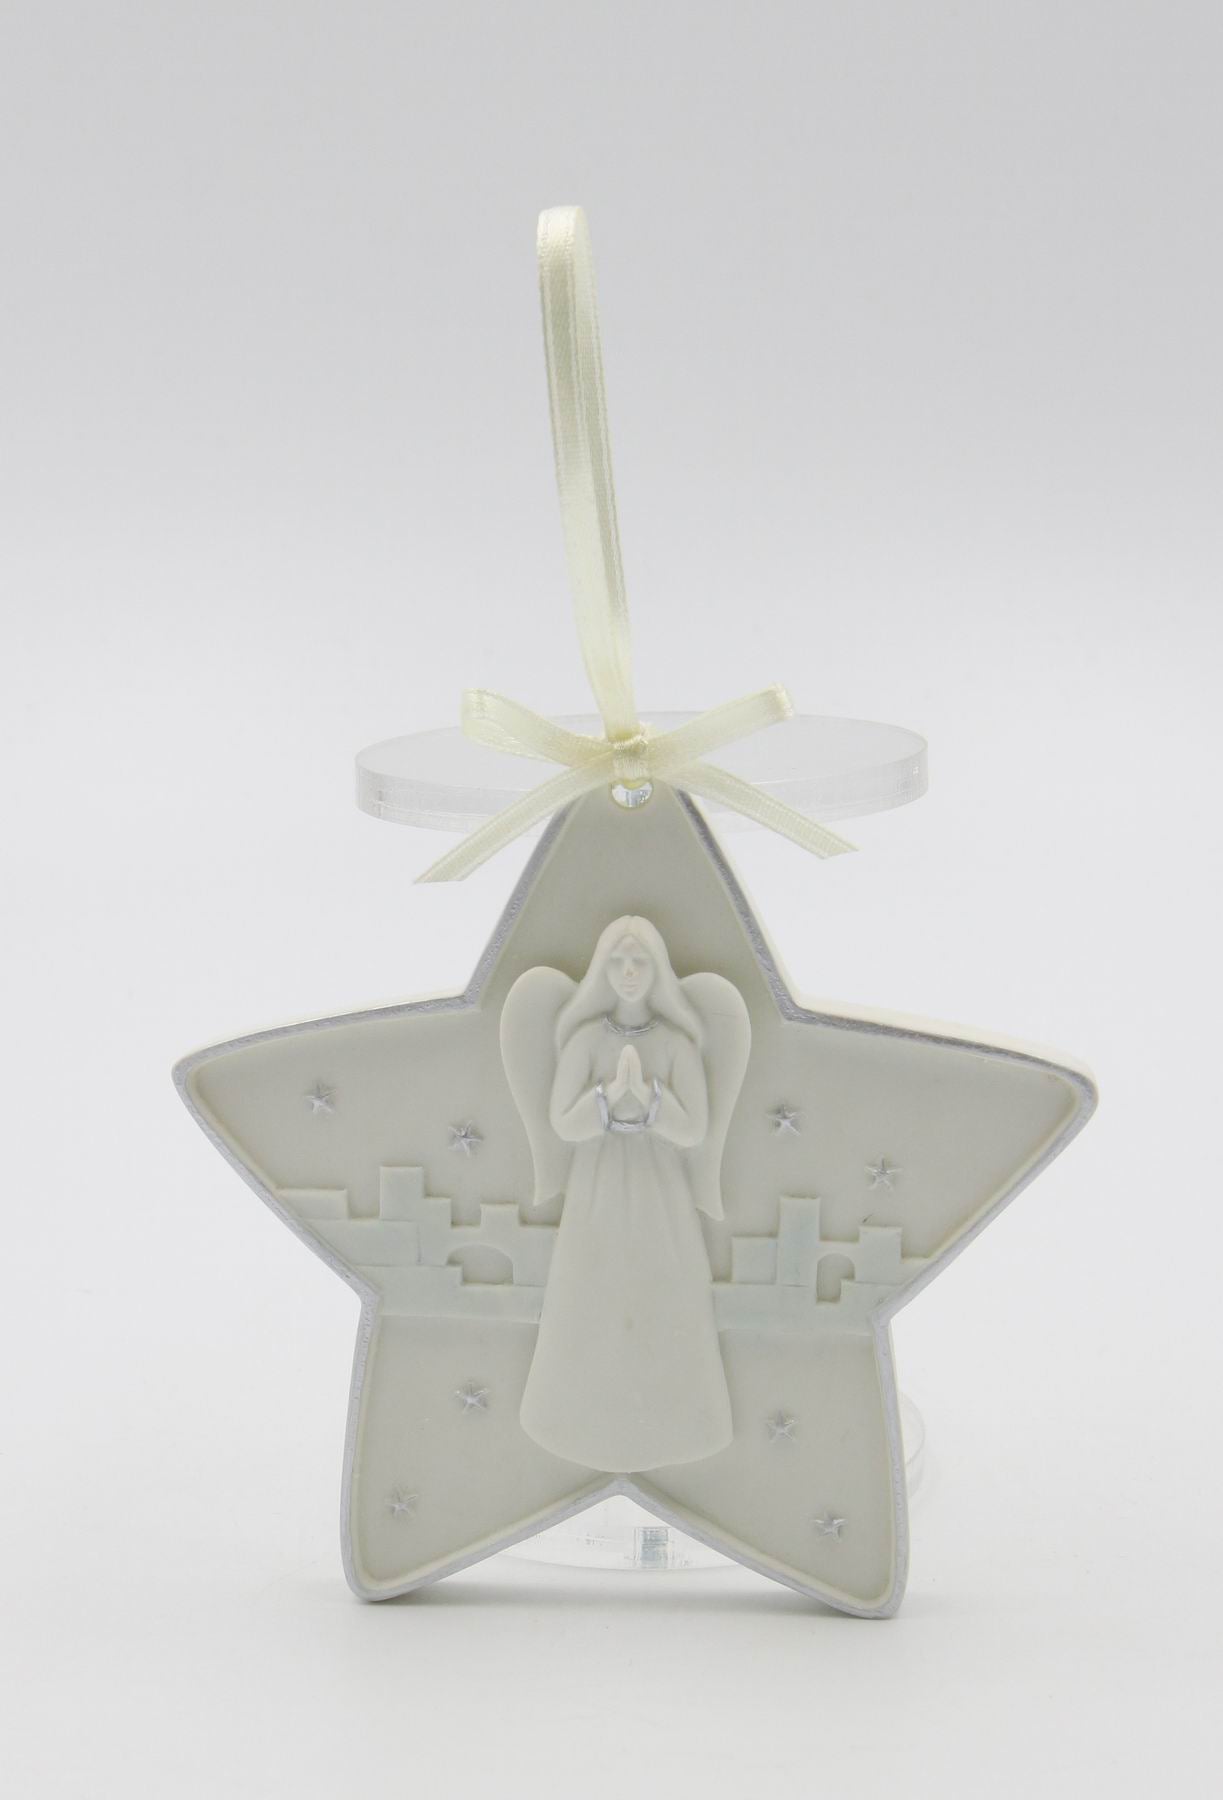 Ceramic North Star Angel Ornament, Home Décor, Religious Décor, Religious Gift, Church Décor, Baptism Gift, Christmas Decor